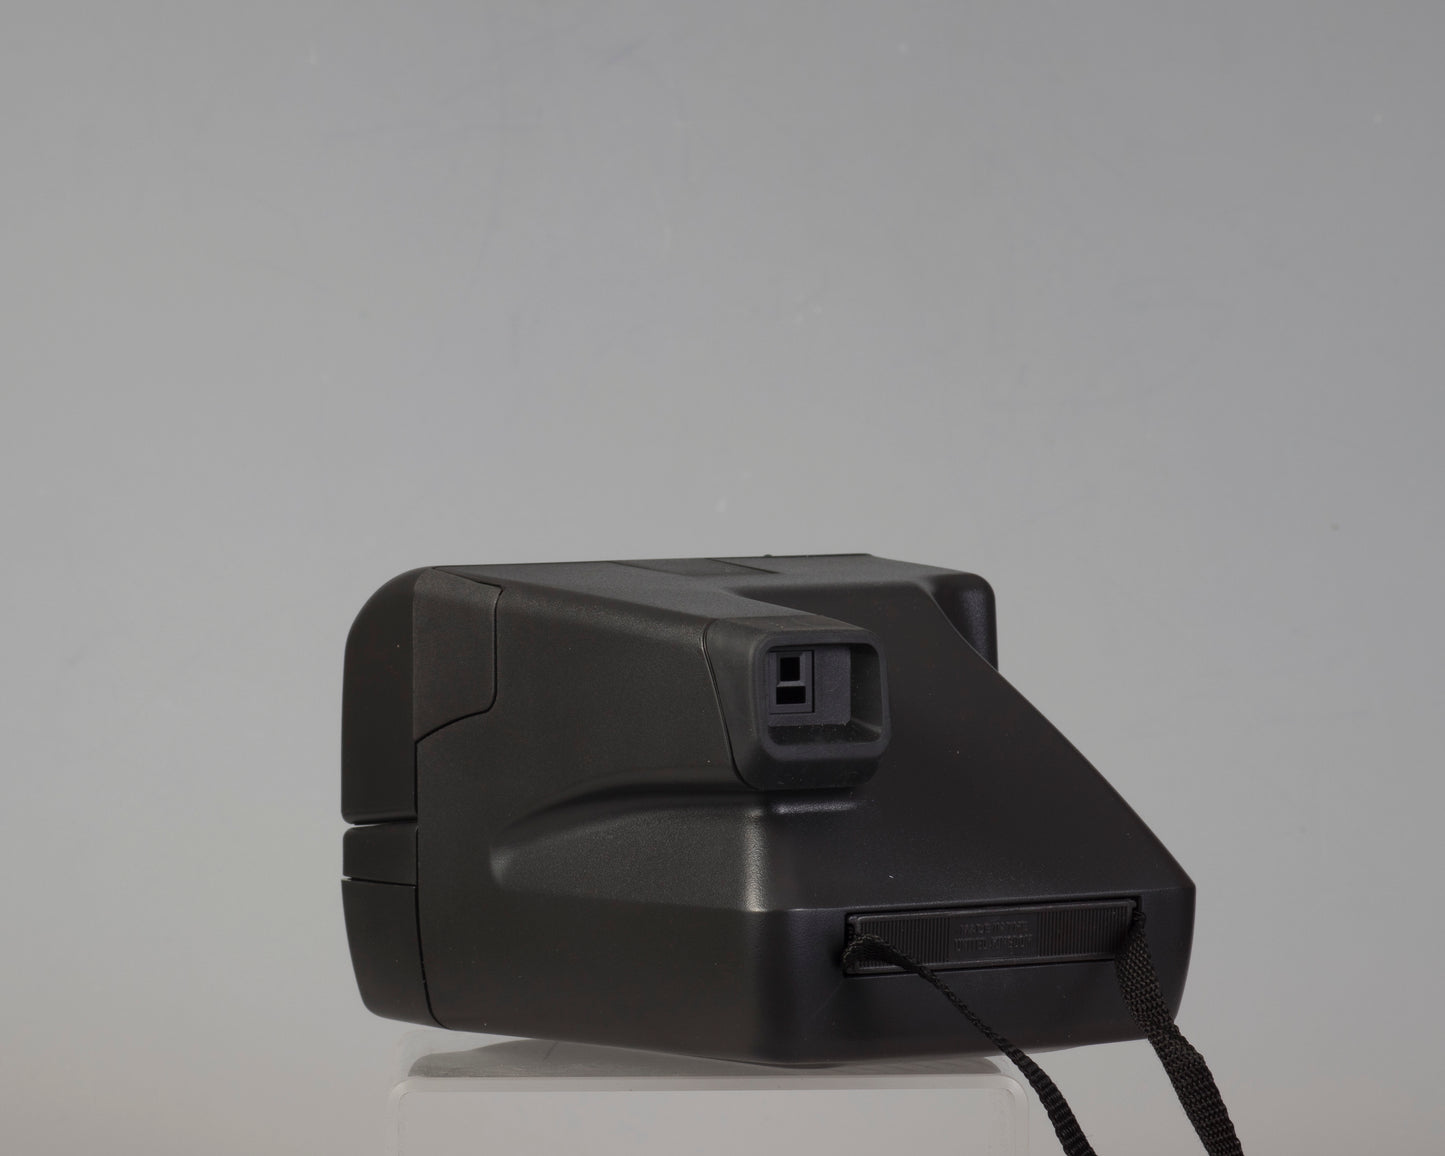 Polaroid OneStep AutoFocus instant camera w/original box and manual